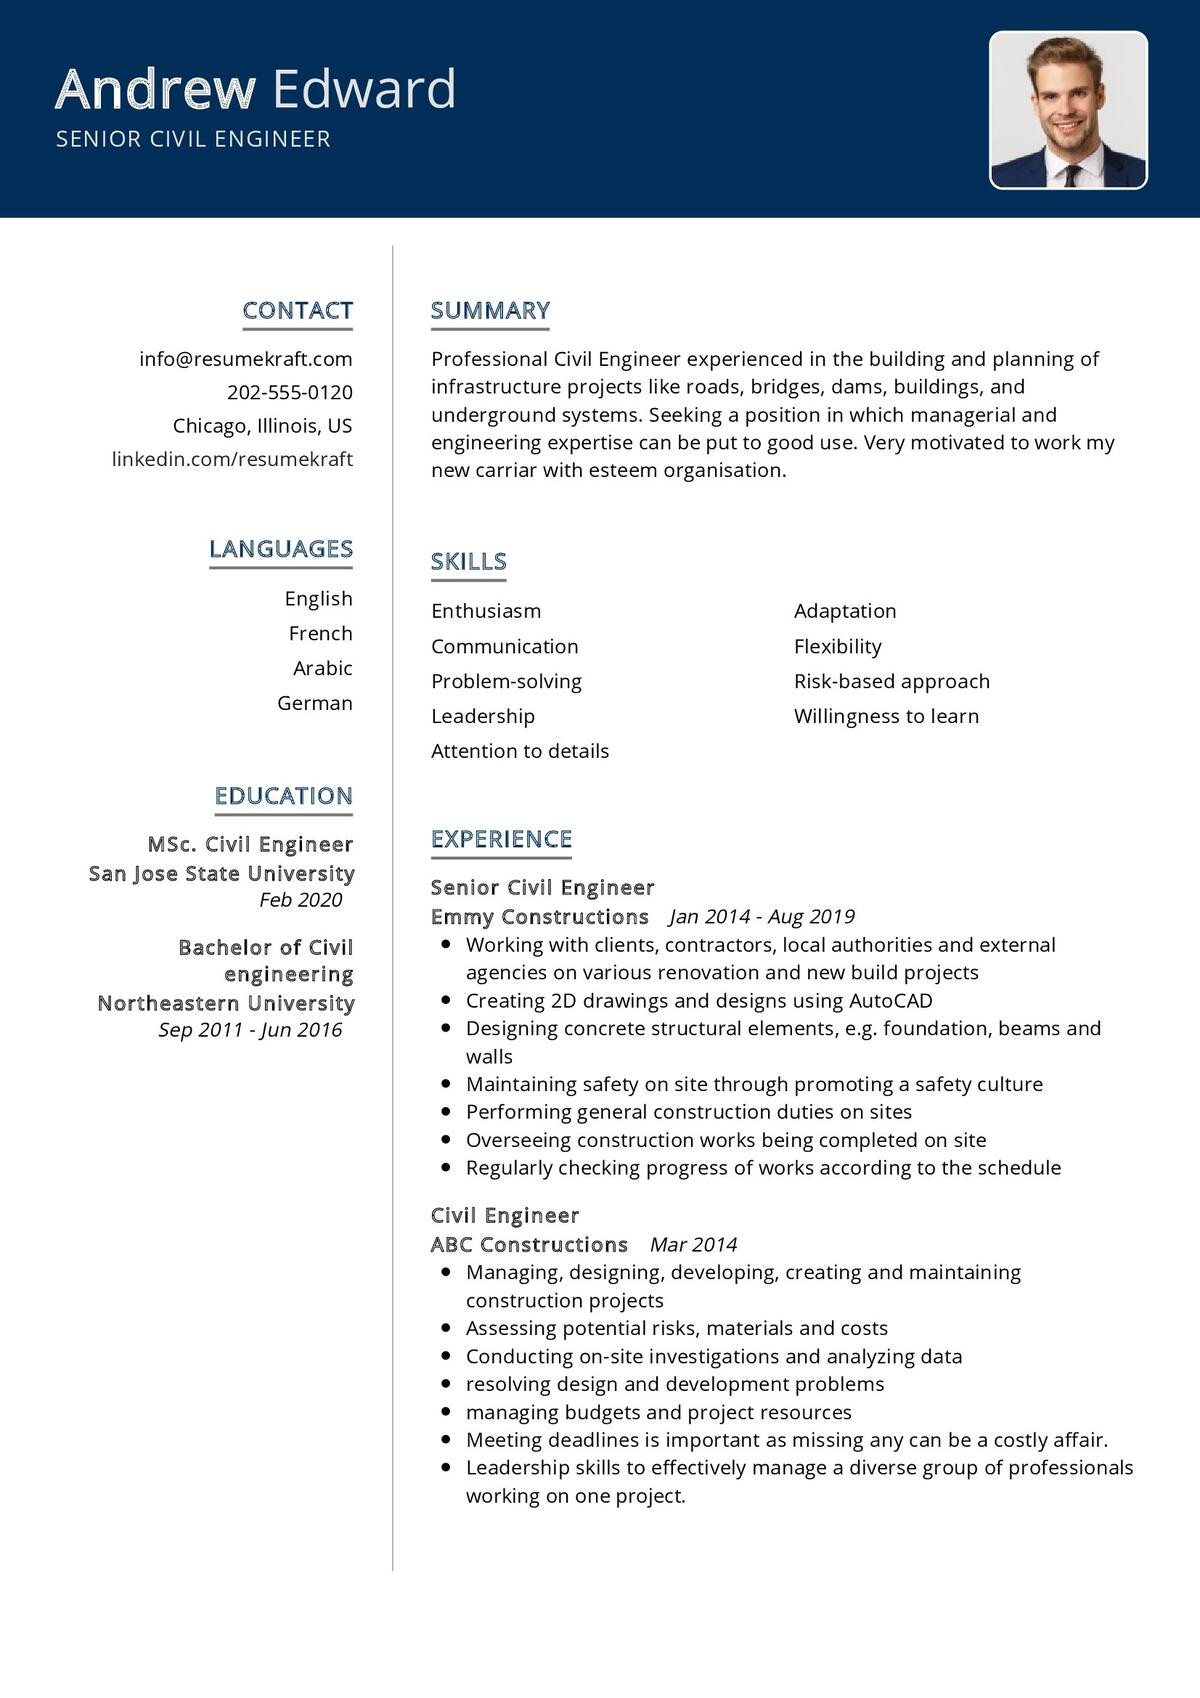 Sample Resume for Civil Engineer Experienced Senior Civil Engineer Resume Sample 2021 Writing Guide – Resumekraft